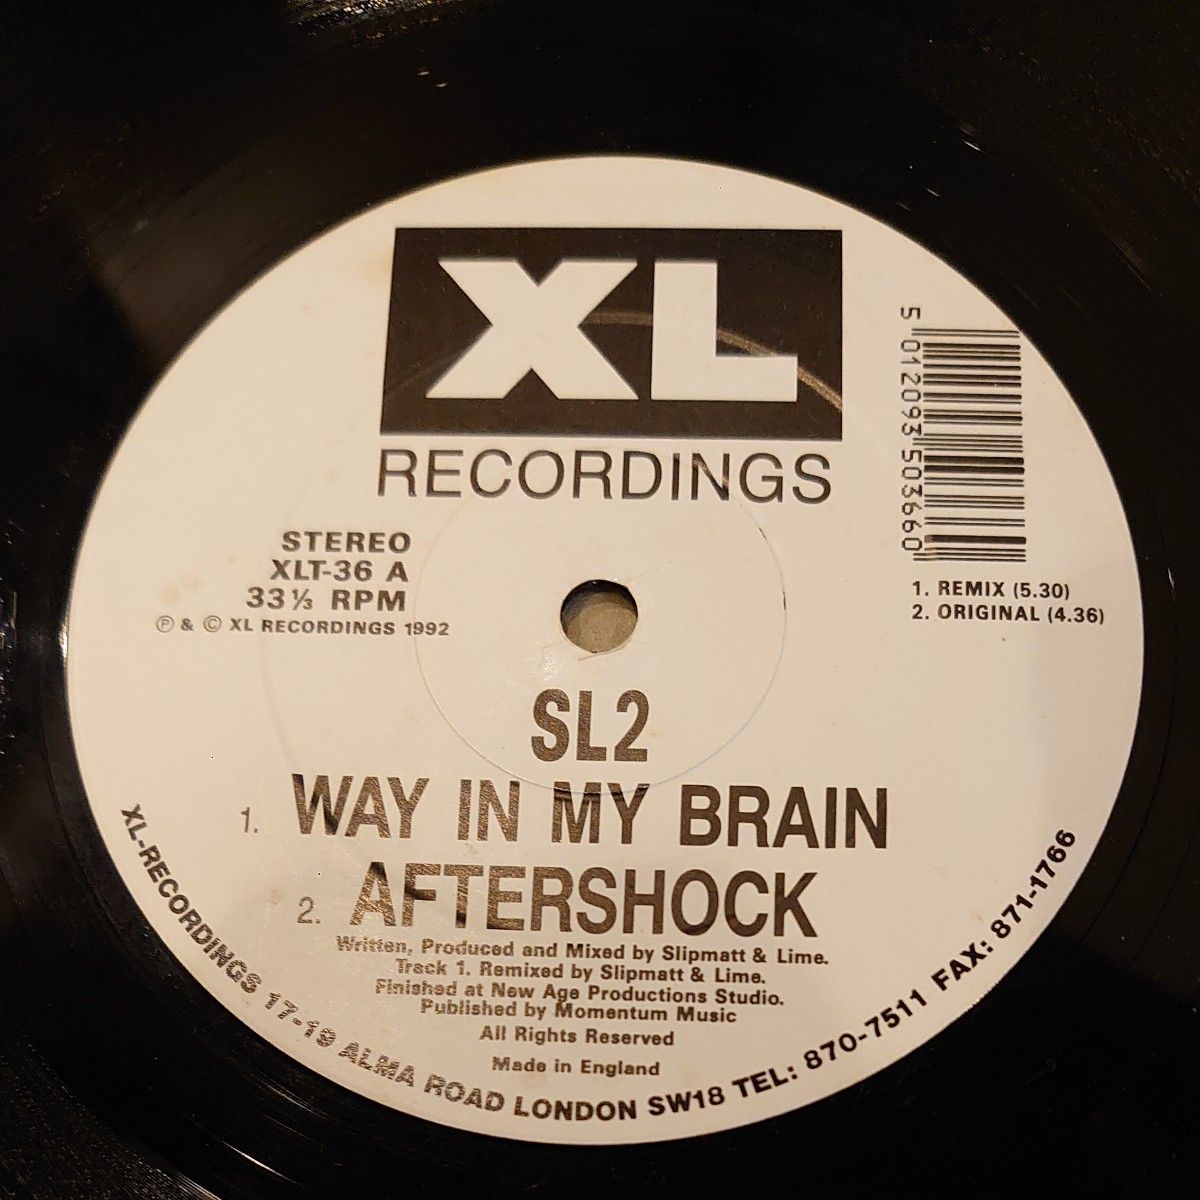 SL2 - way in my brain（remix） 90sレイブ・ハードコア